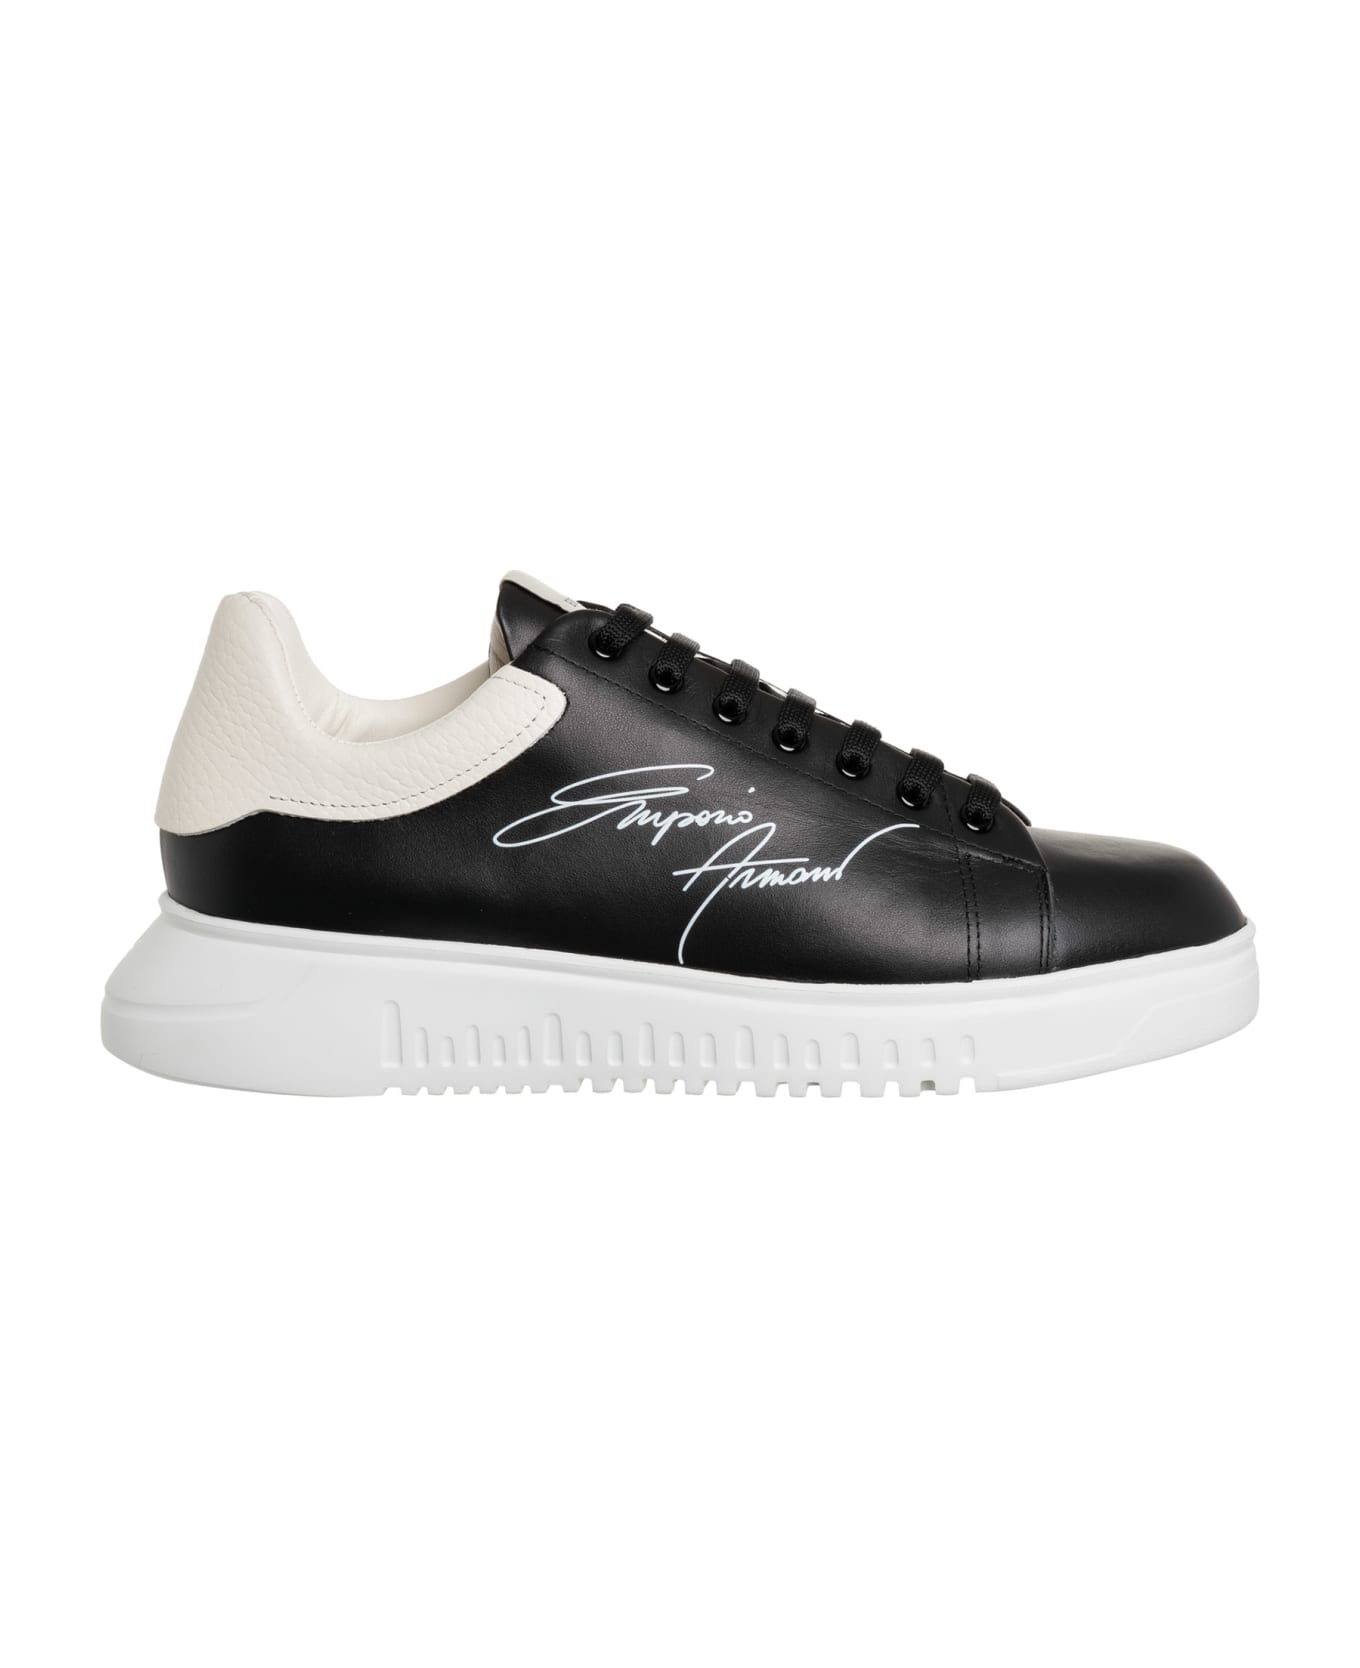 Emporio Armani Leather Sneakers - Black スニーカー